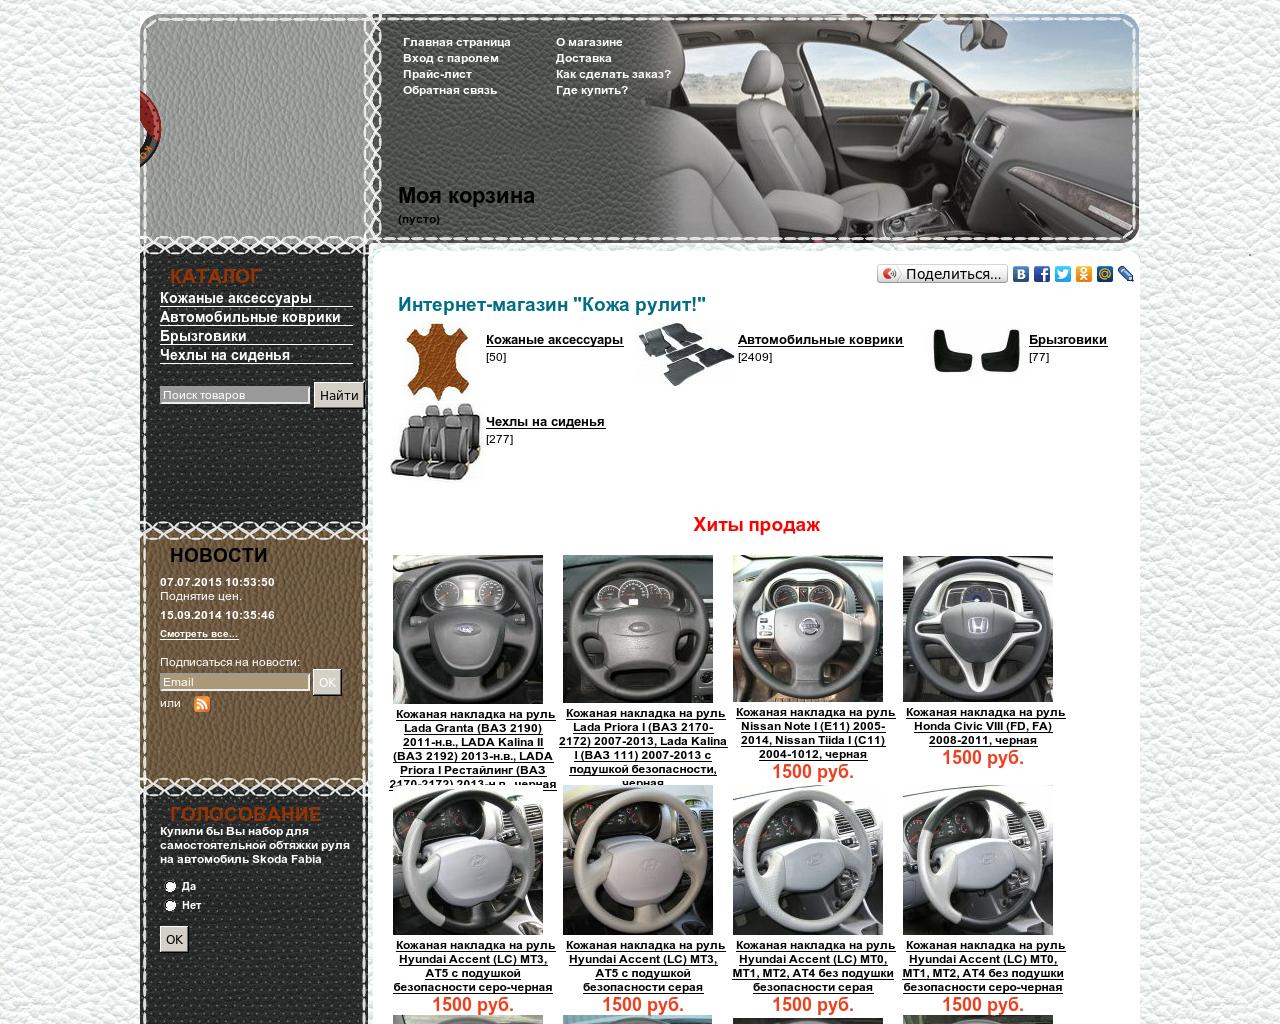 Изображение сайта leather-kit.ru в разрешении 1280x1024